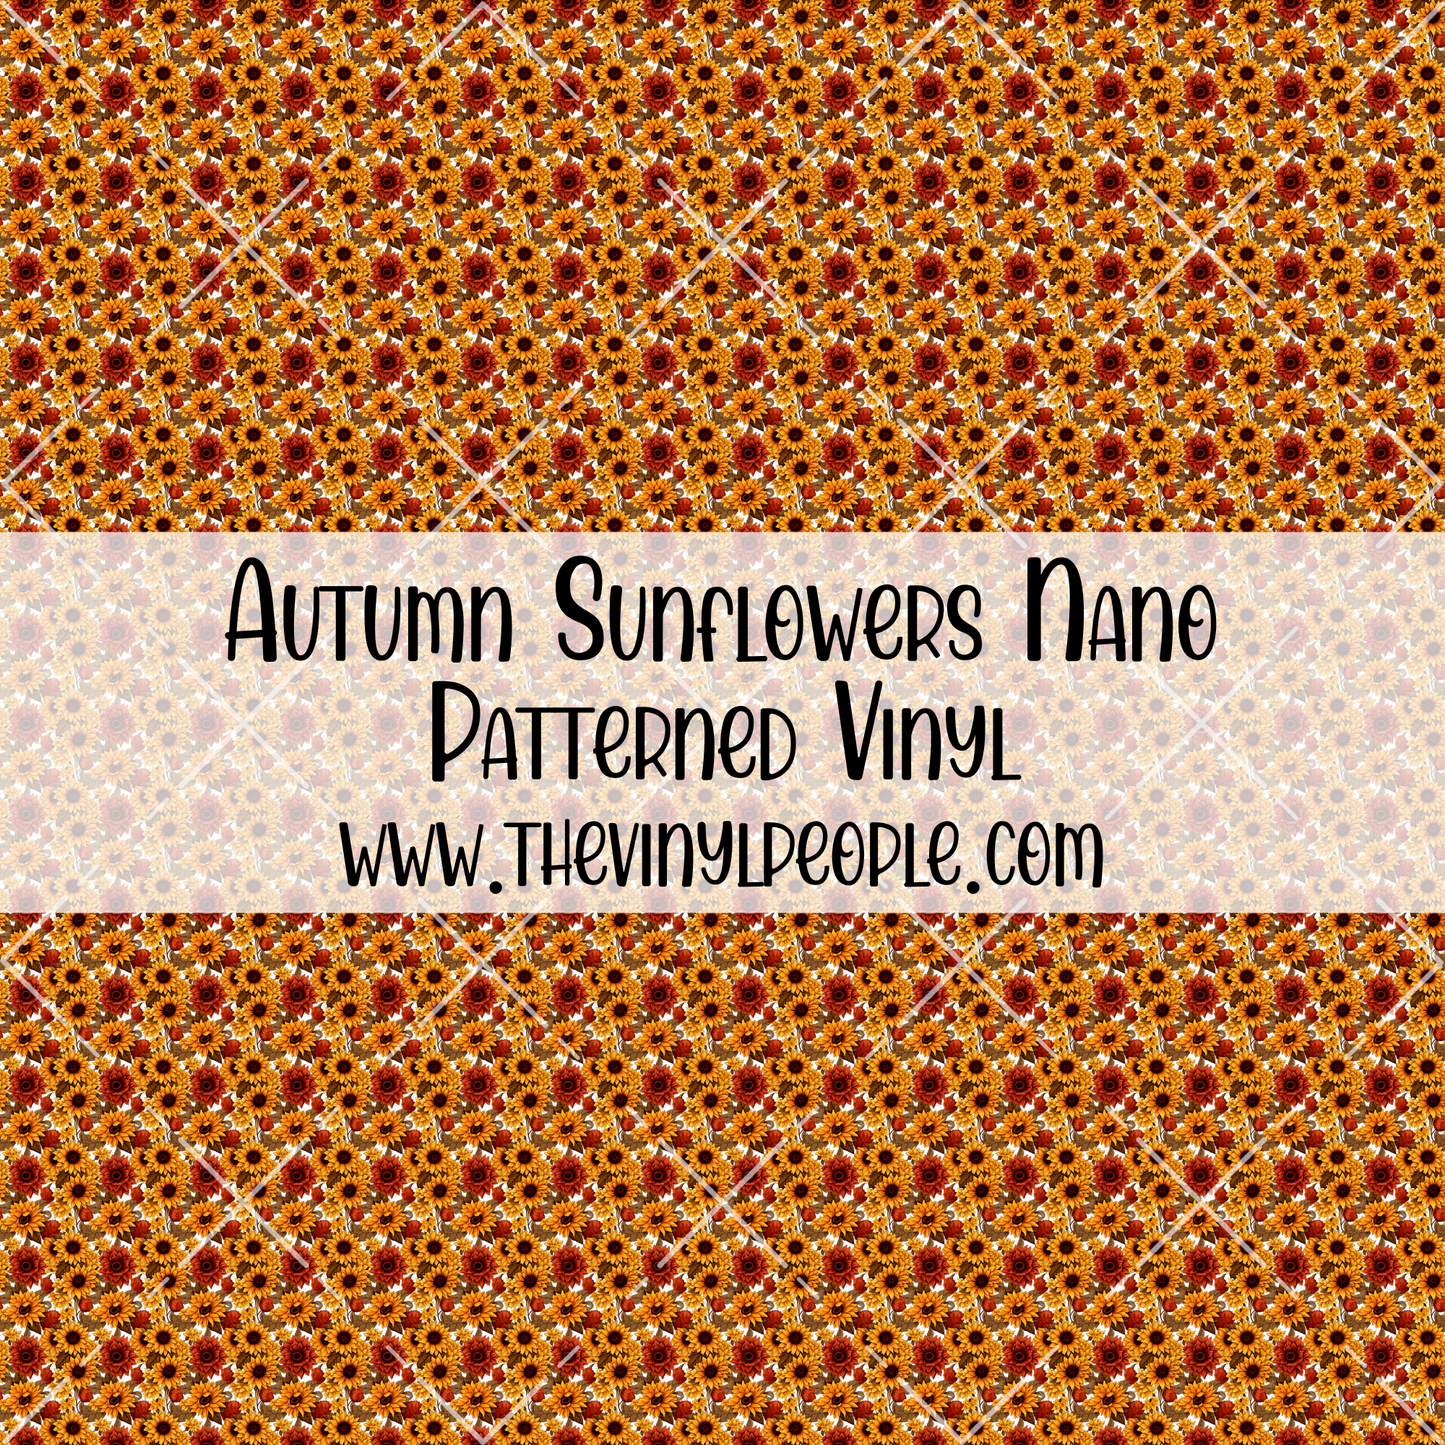 Autumn Sunflowers Patterned Vinyl